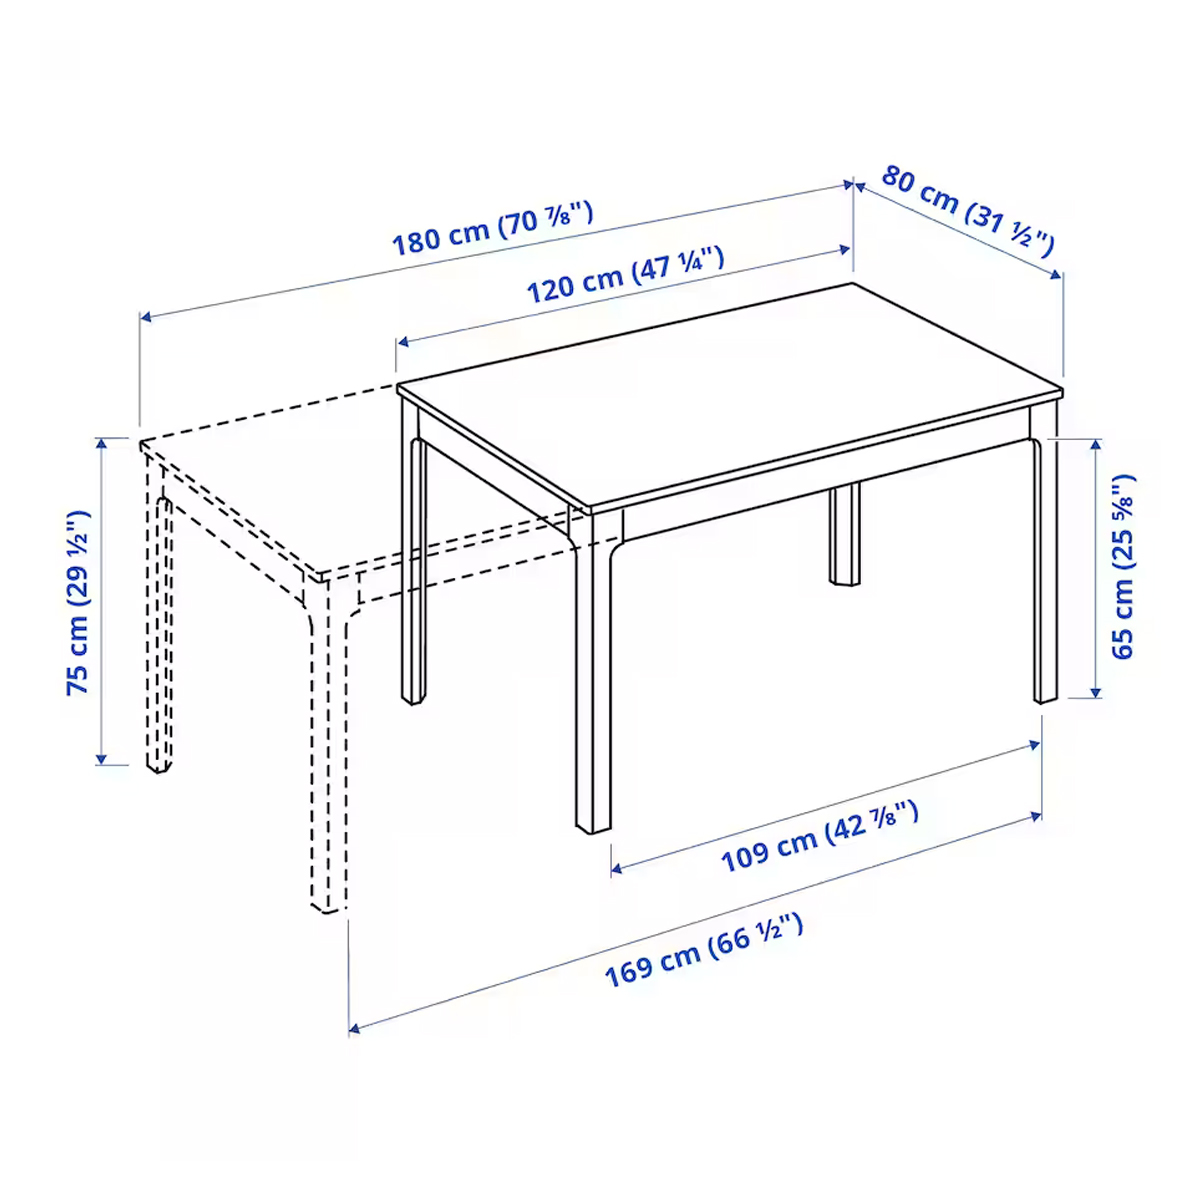 EKEDALEN 120/180x80cm trpezarijski produzivi sto, bijela